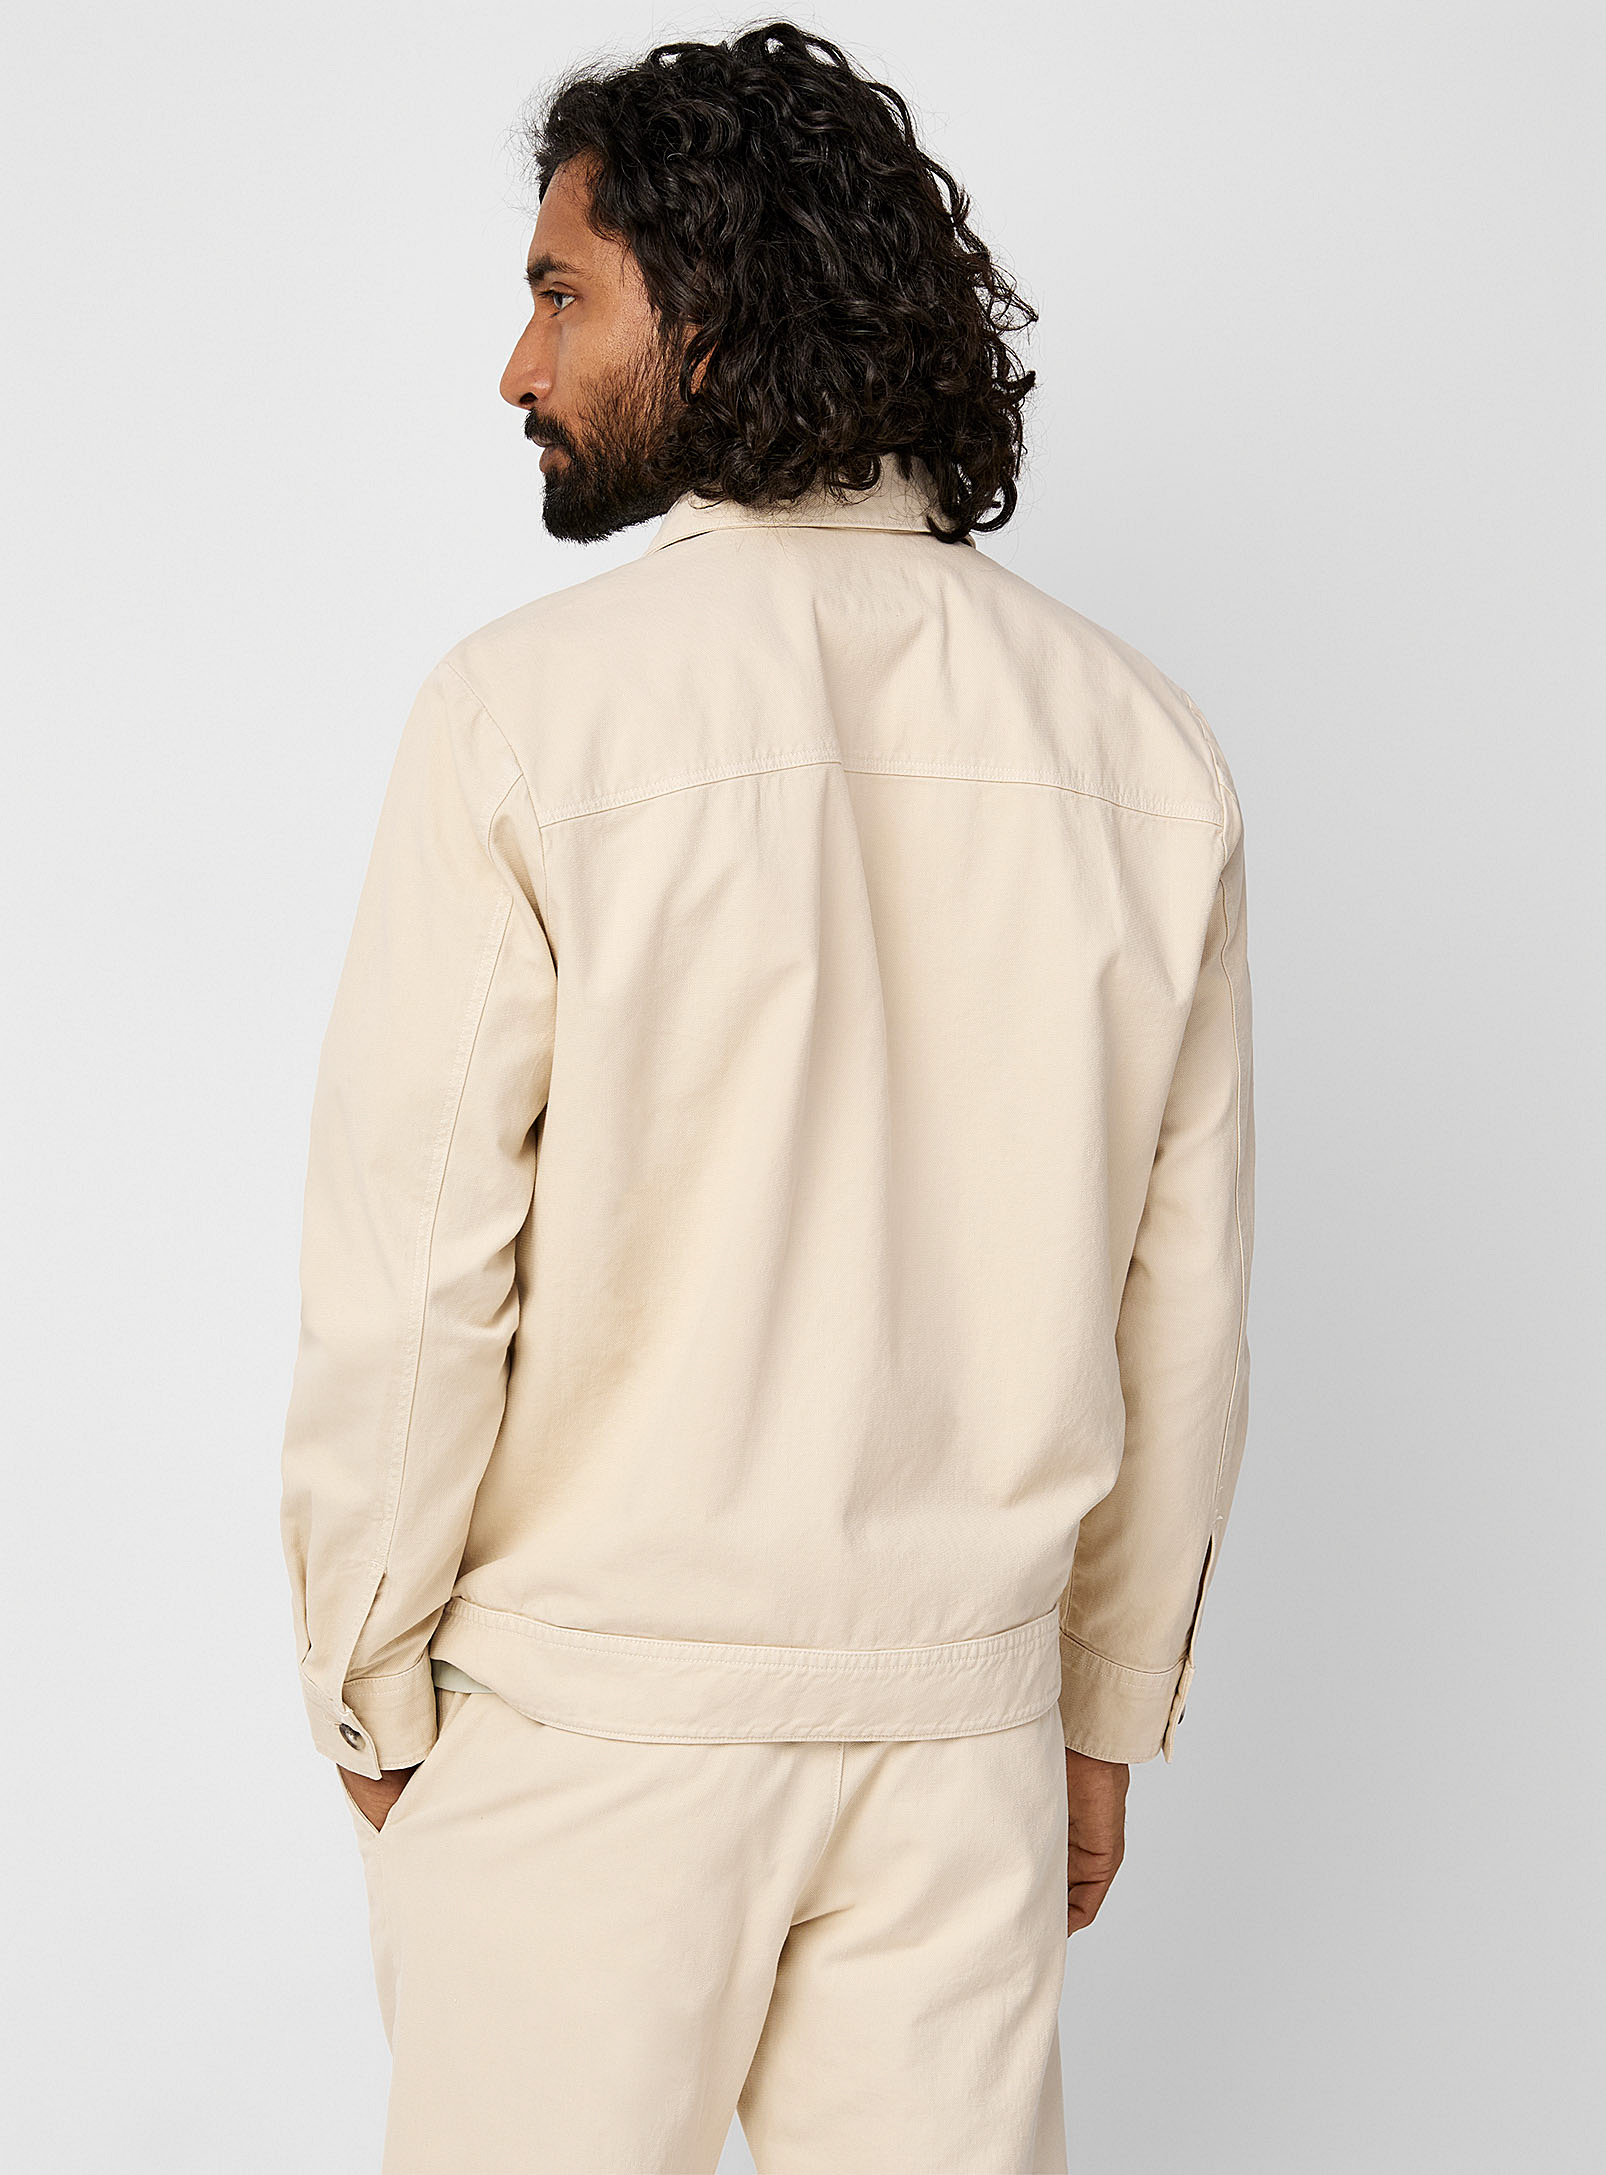 Marc O'Polo - La veste sergé écru en coton bio et lin